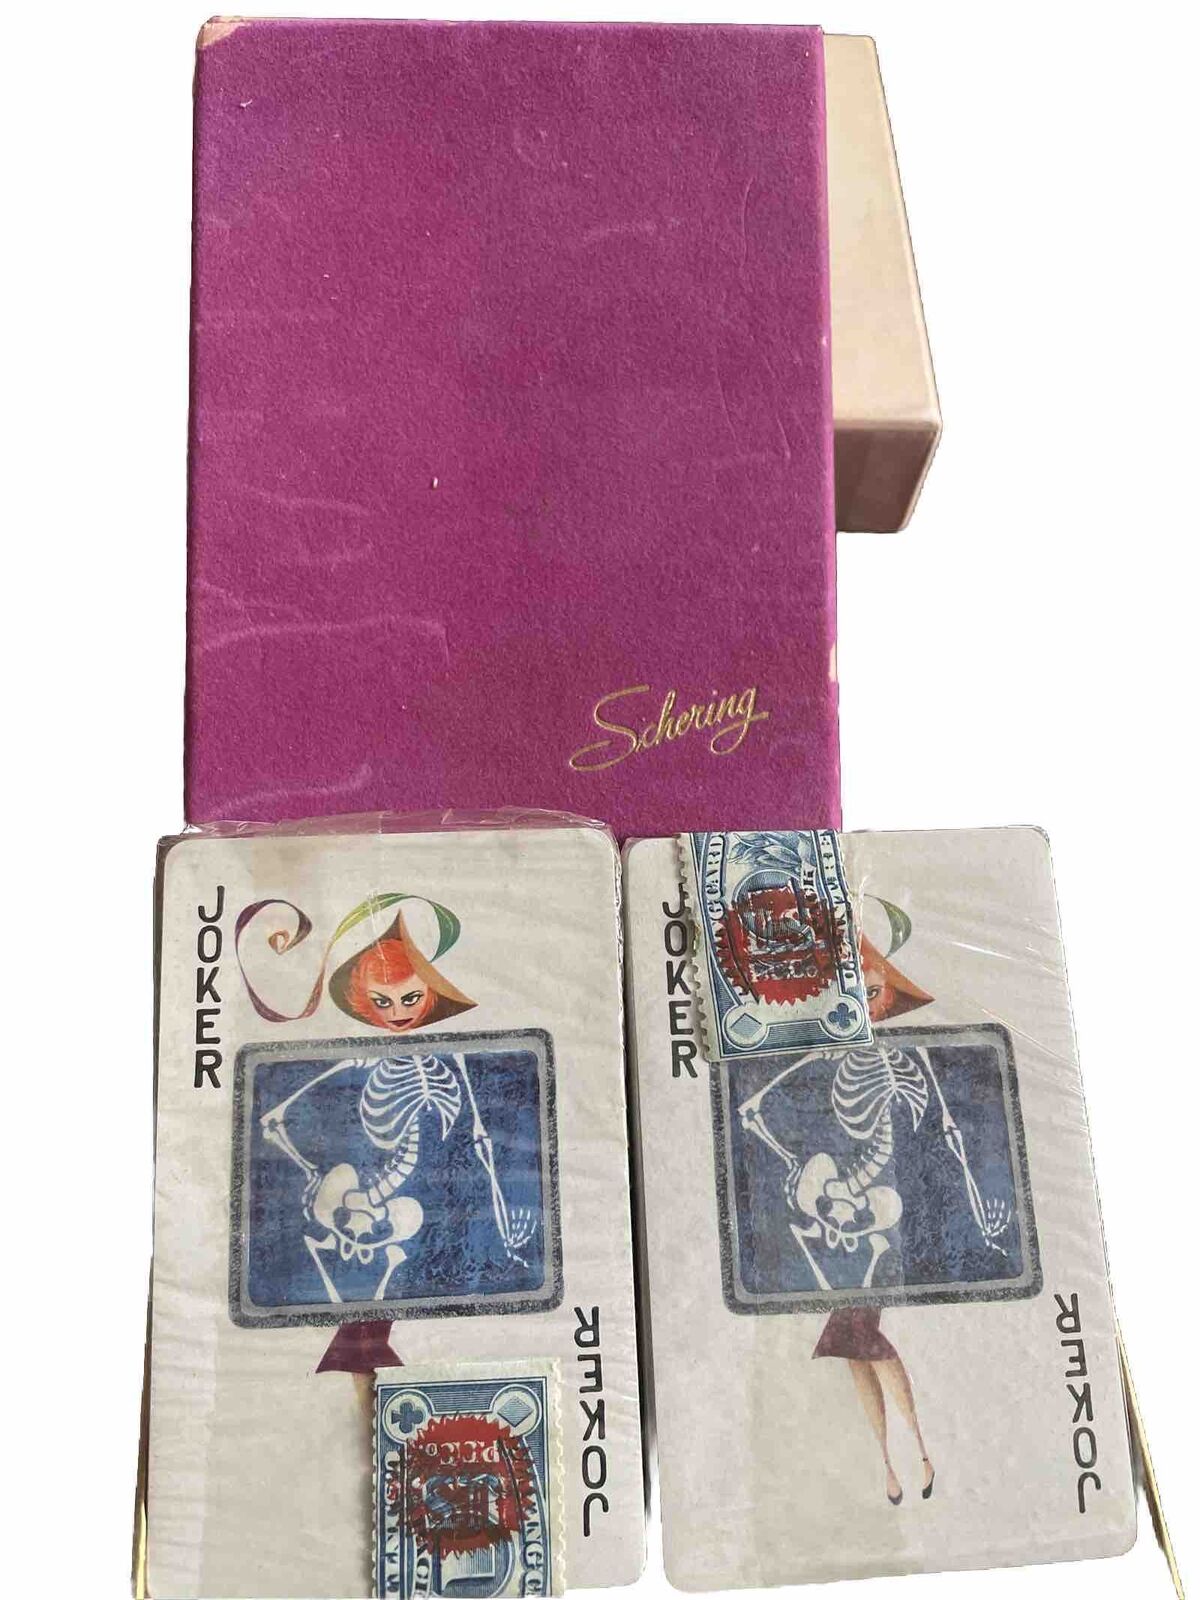 Two Decks Schering Medical Playing Cards Sealed Stamp New Sealed Rare Vintage